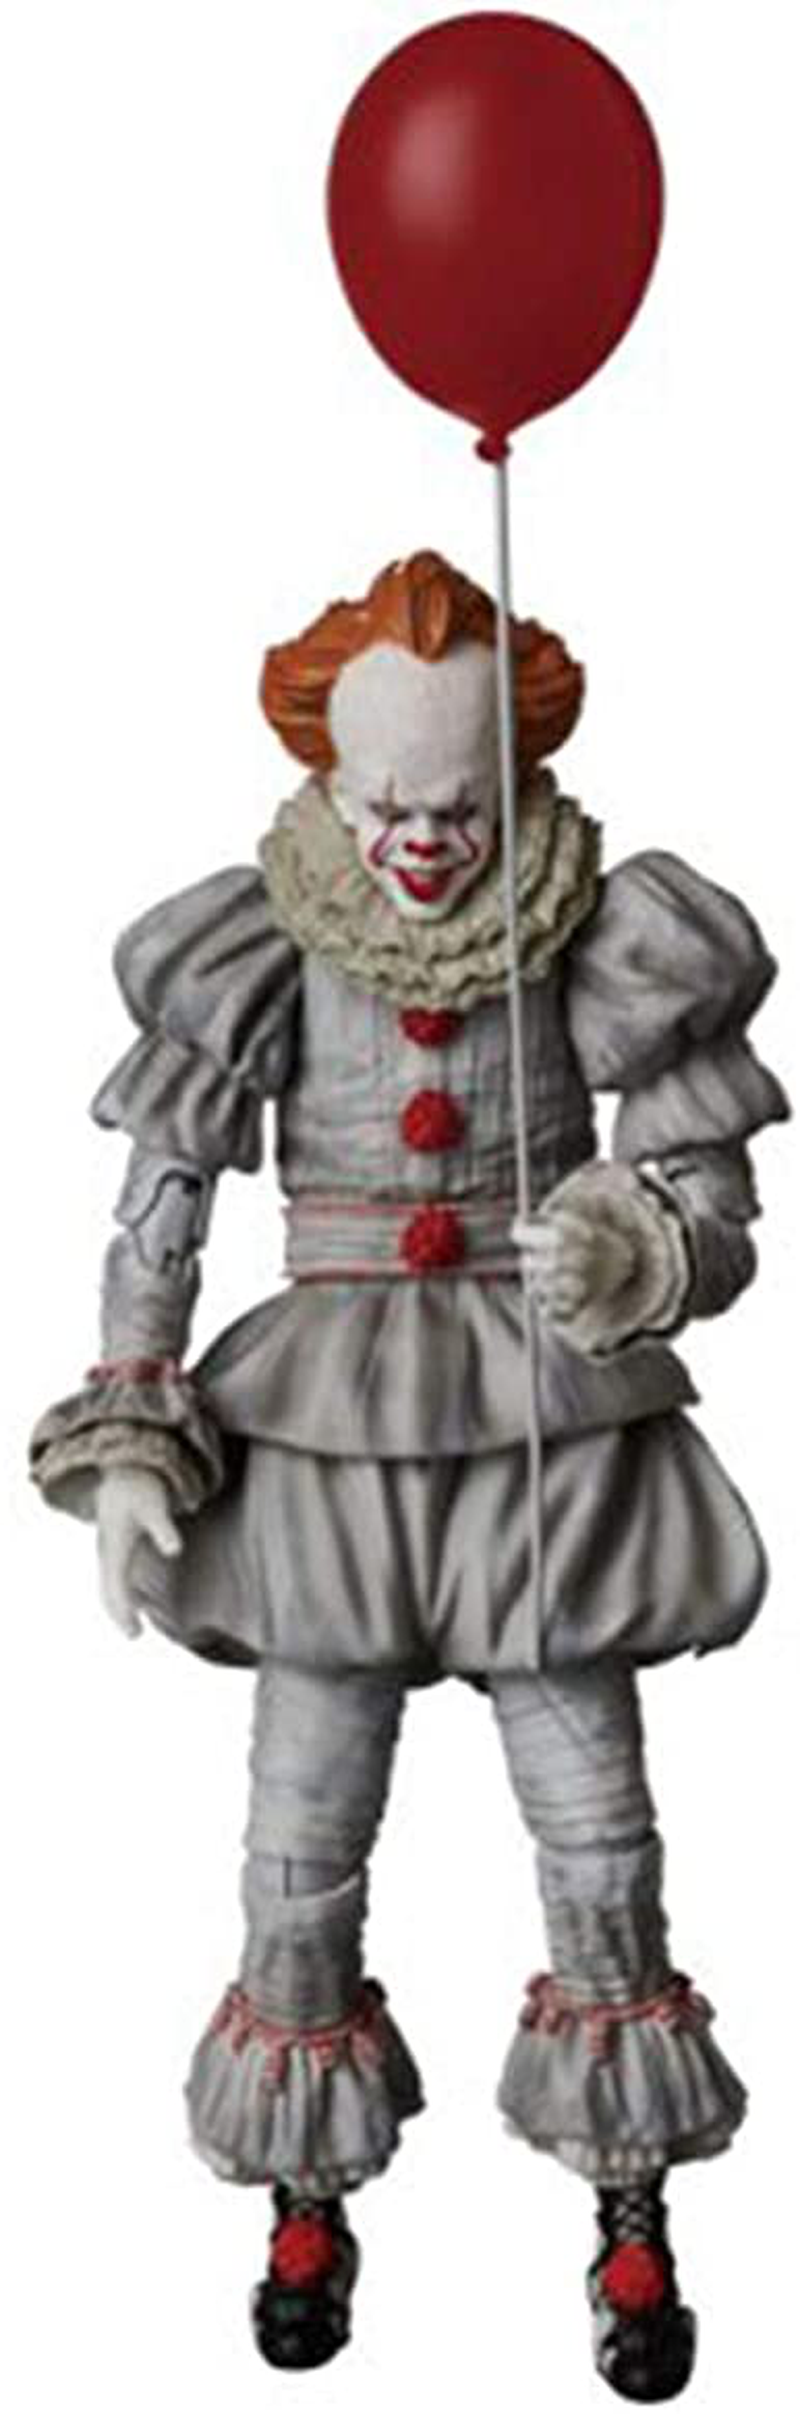 IVY HAIR Kids Popular Movie Halloween Clown Costume Ball Makeup Cosplay Costume… Apparel & Accessories > Costumes & Accessories > Costumes IVY HAIR Type-b Small 